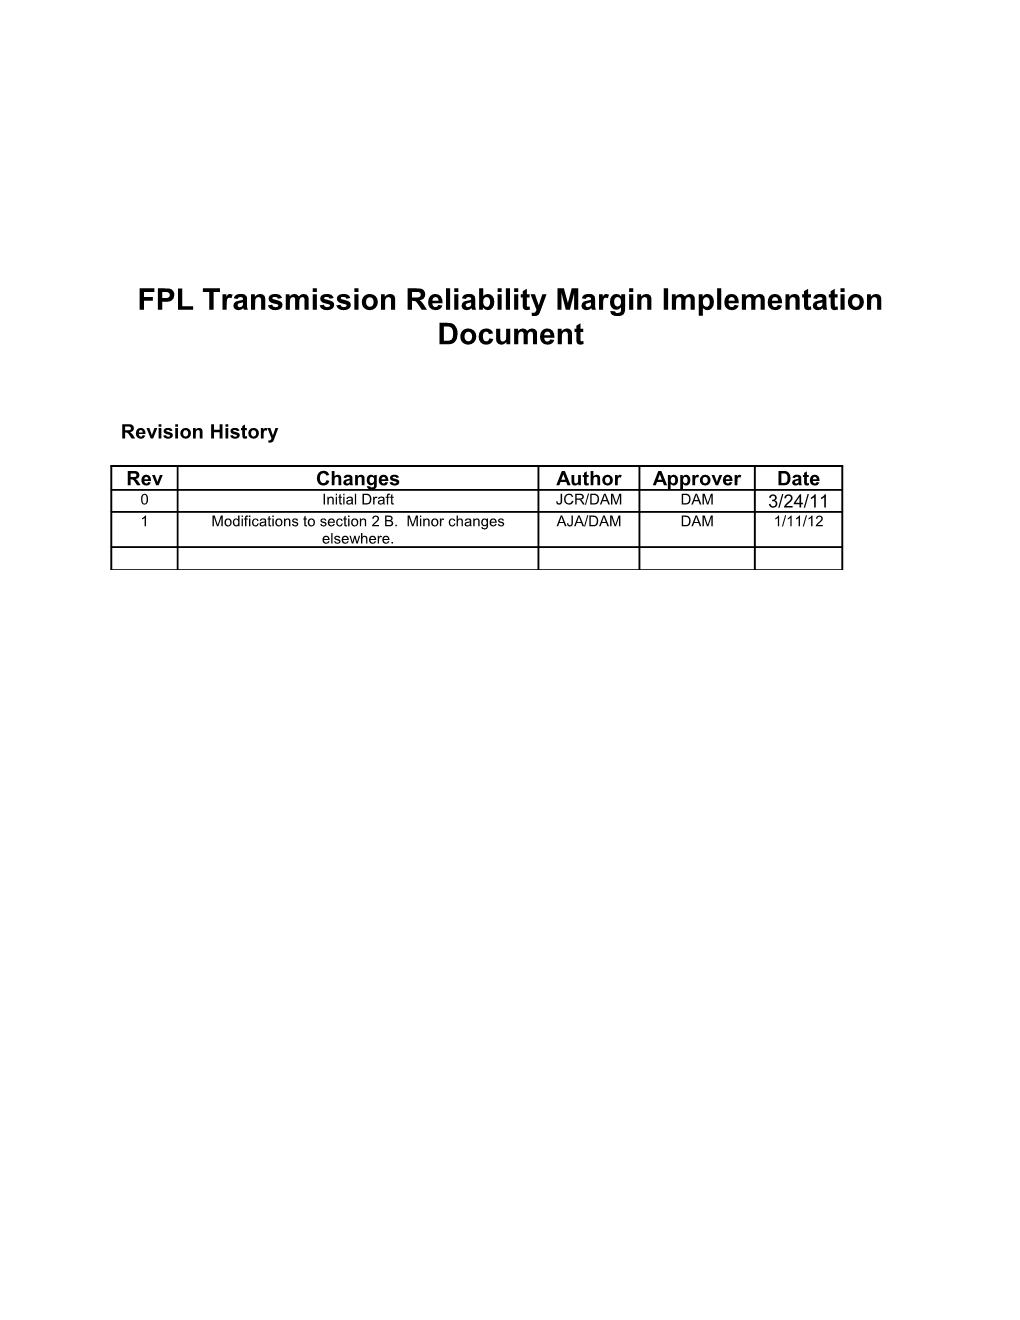 Transmission Reliability Margin Implementation Document (TRMID)